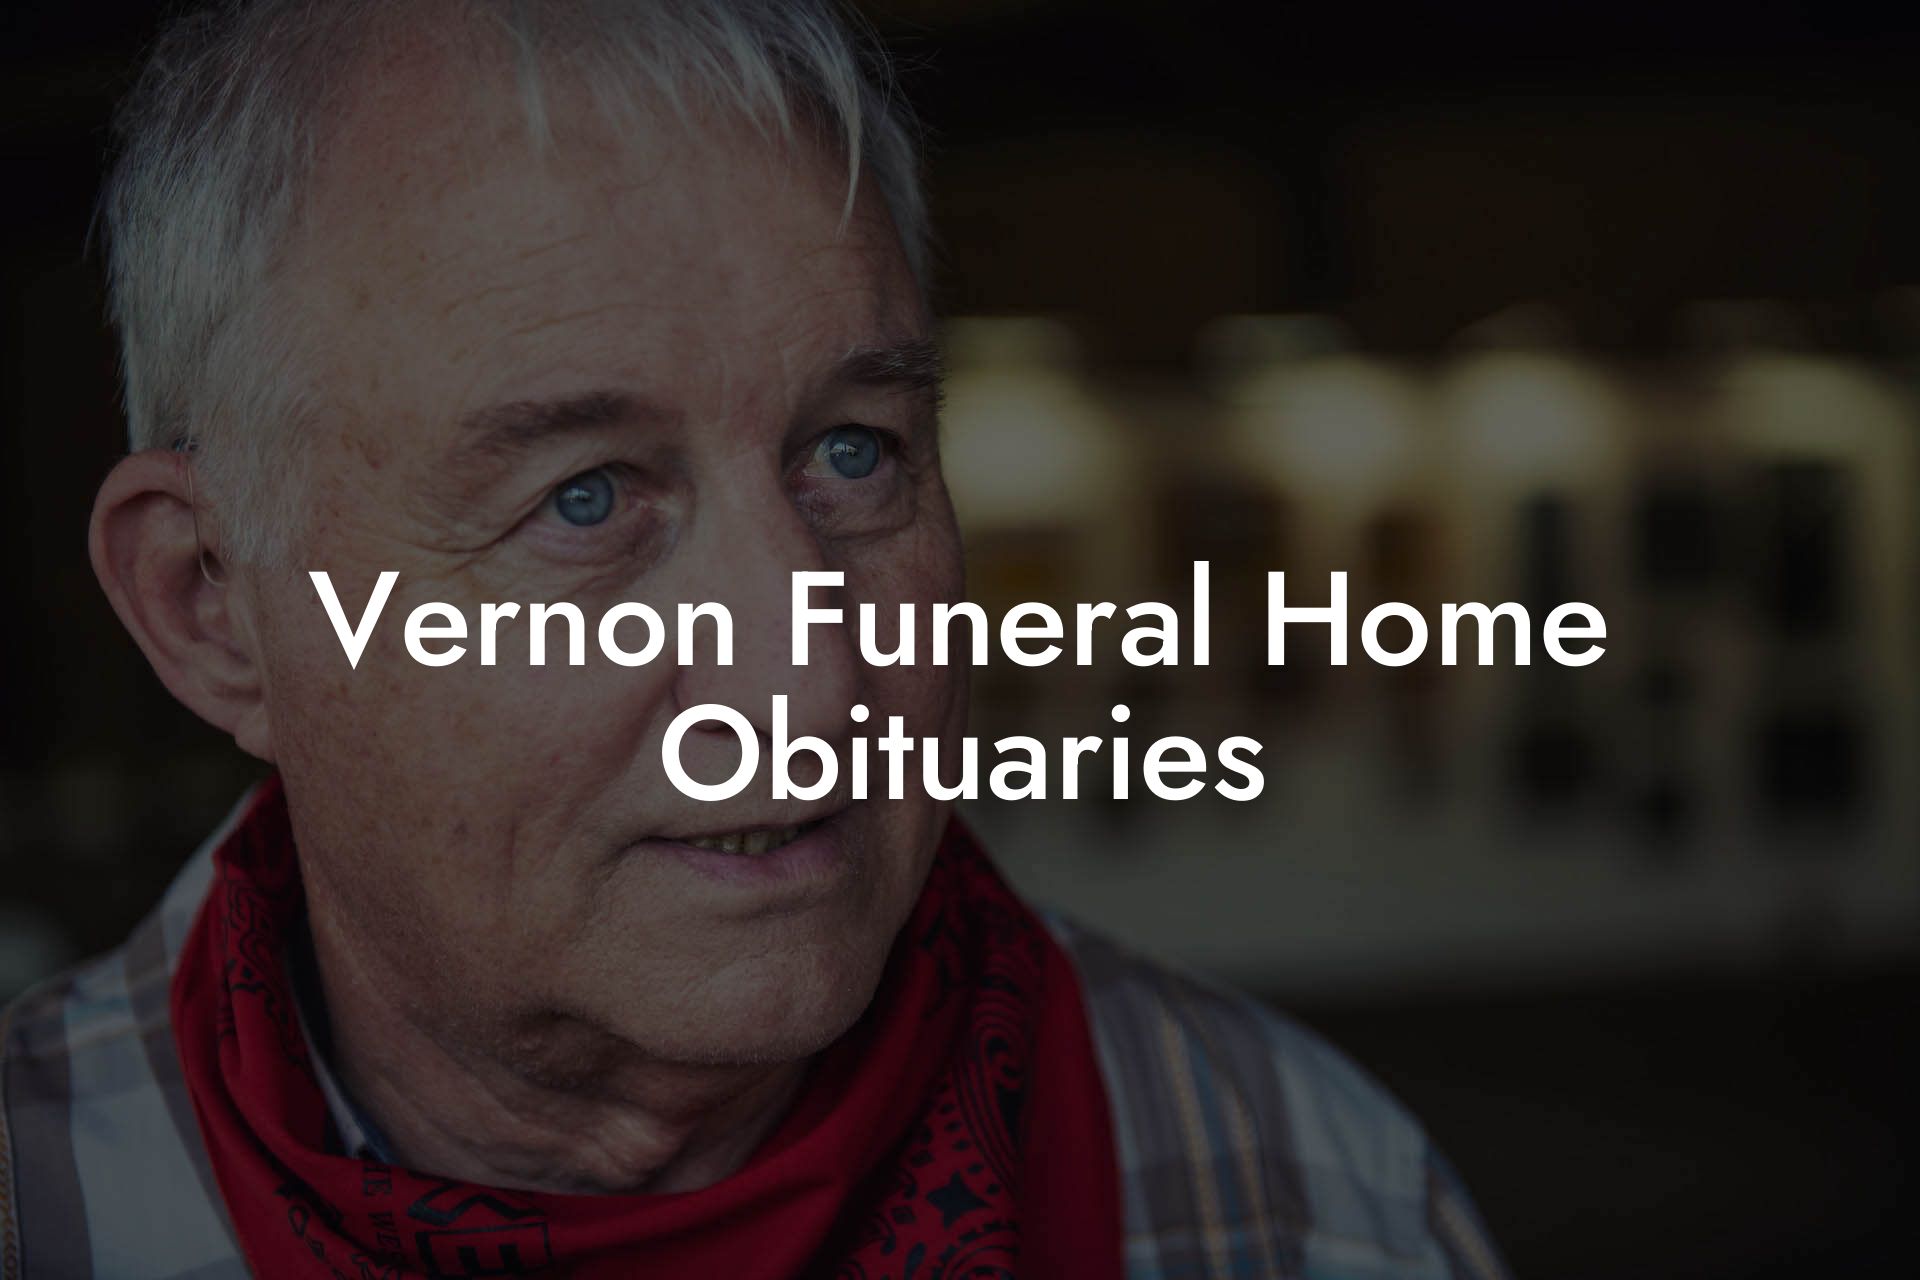 Vernon Funeral Home Obituaries